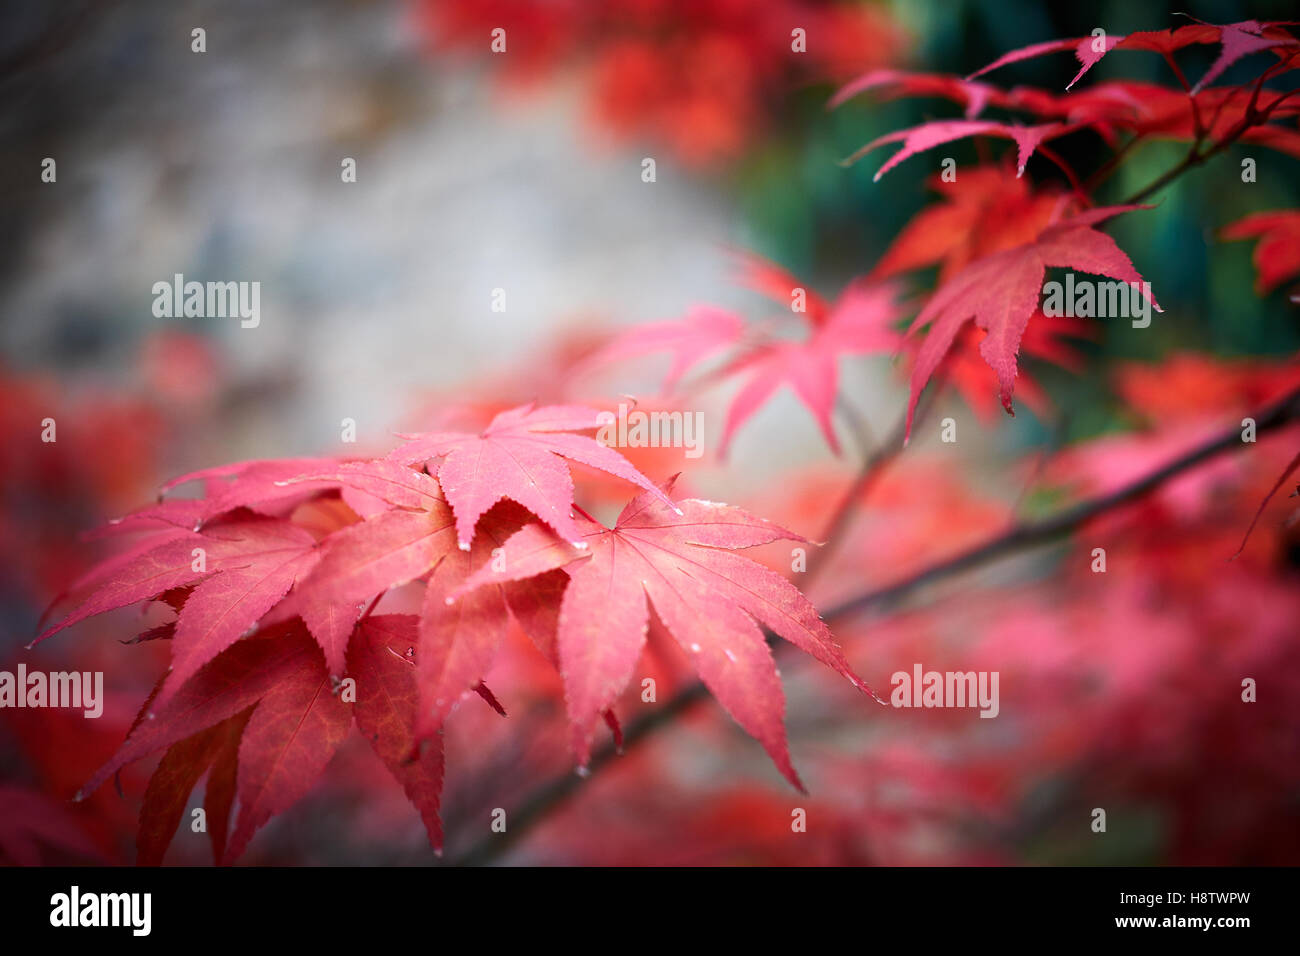 Red Acer Palmatum Osakazuki maple tree leaves against a green background Stock Photo